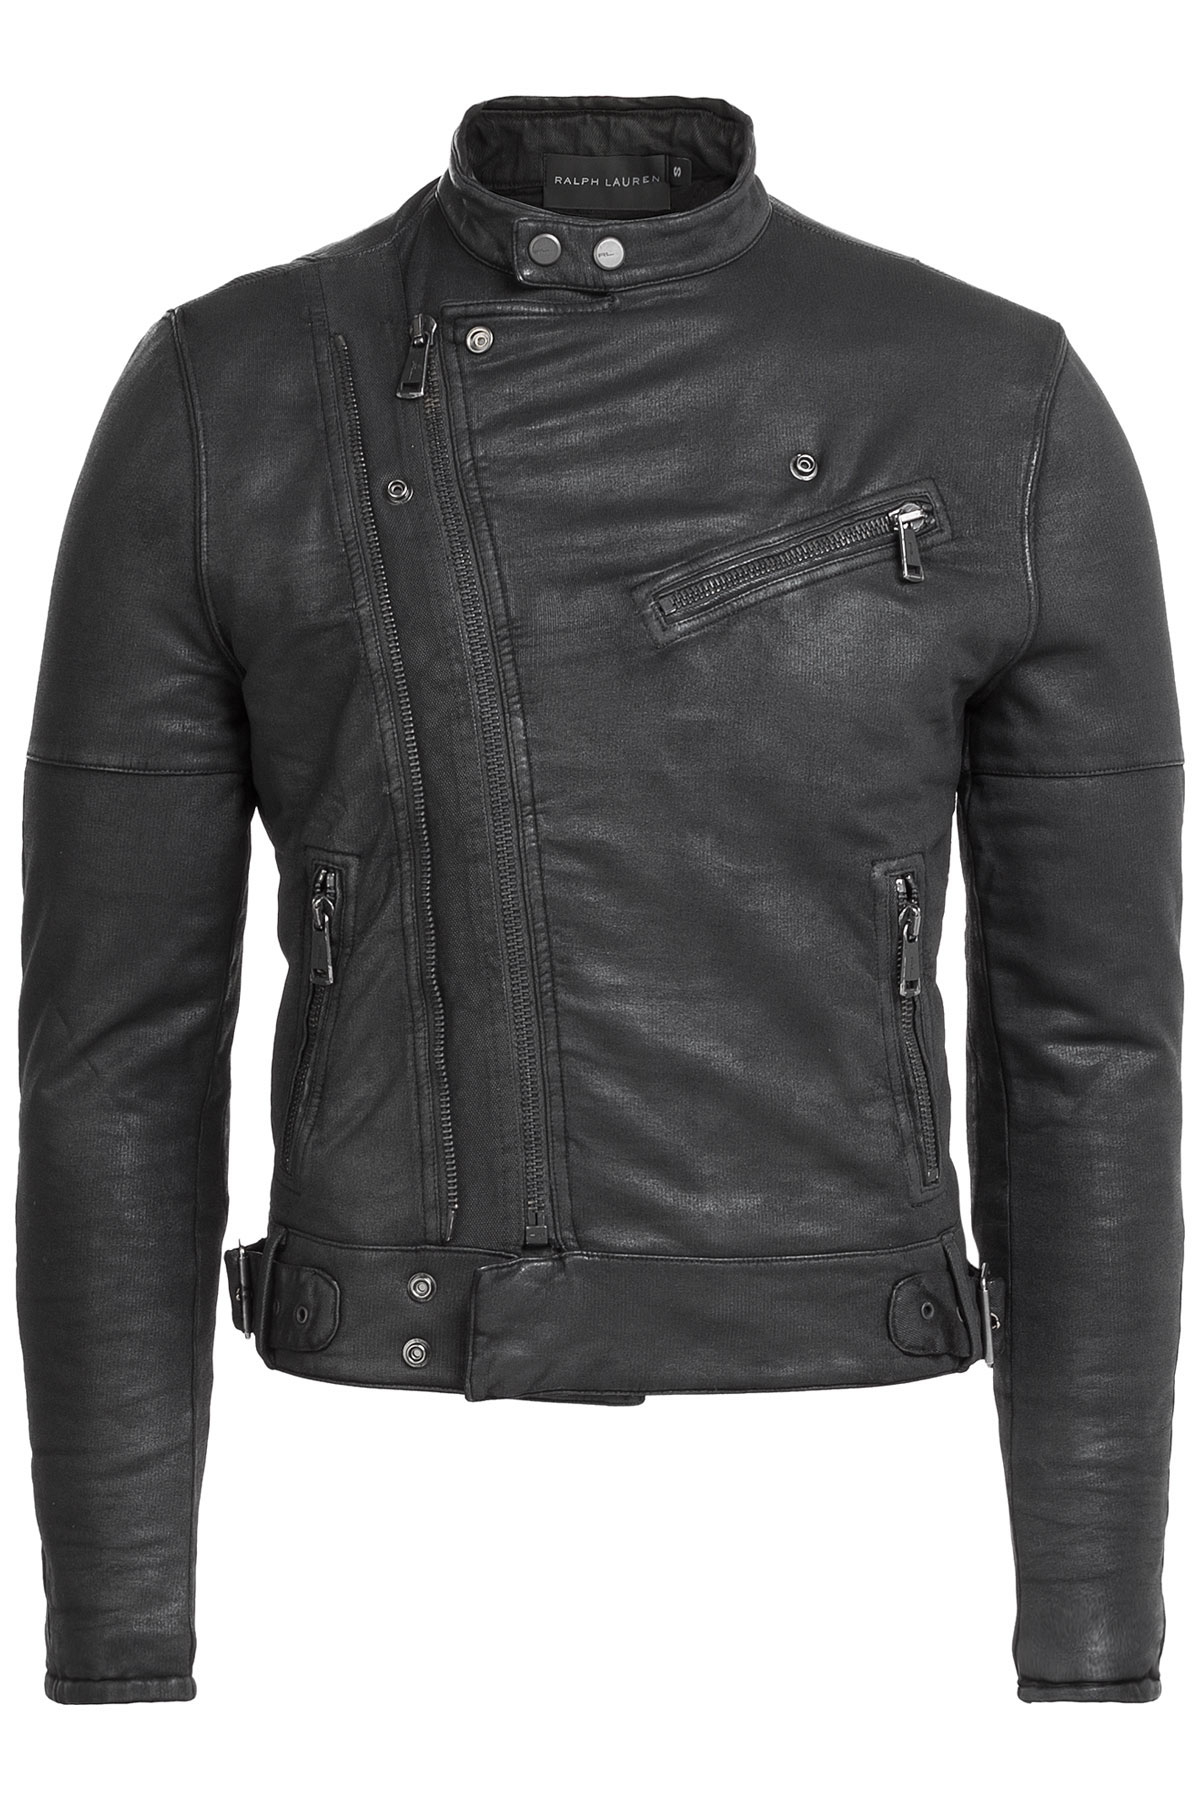 Lyst - Ralph Lauren Black Label Cotton Biker Jacket - Black in Black